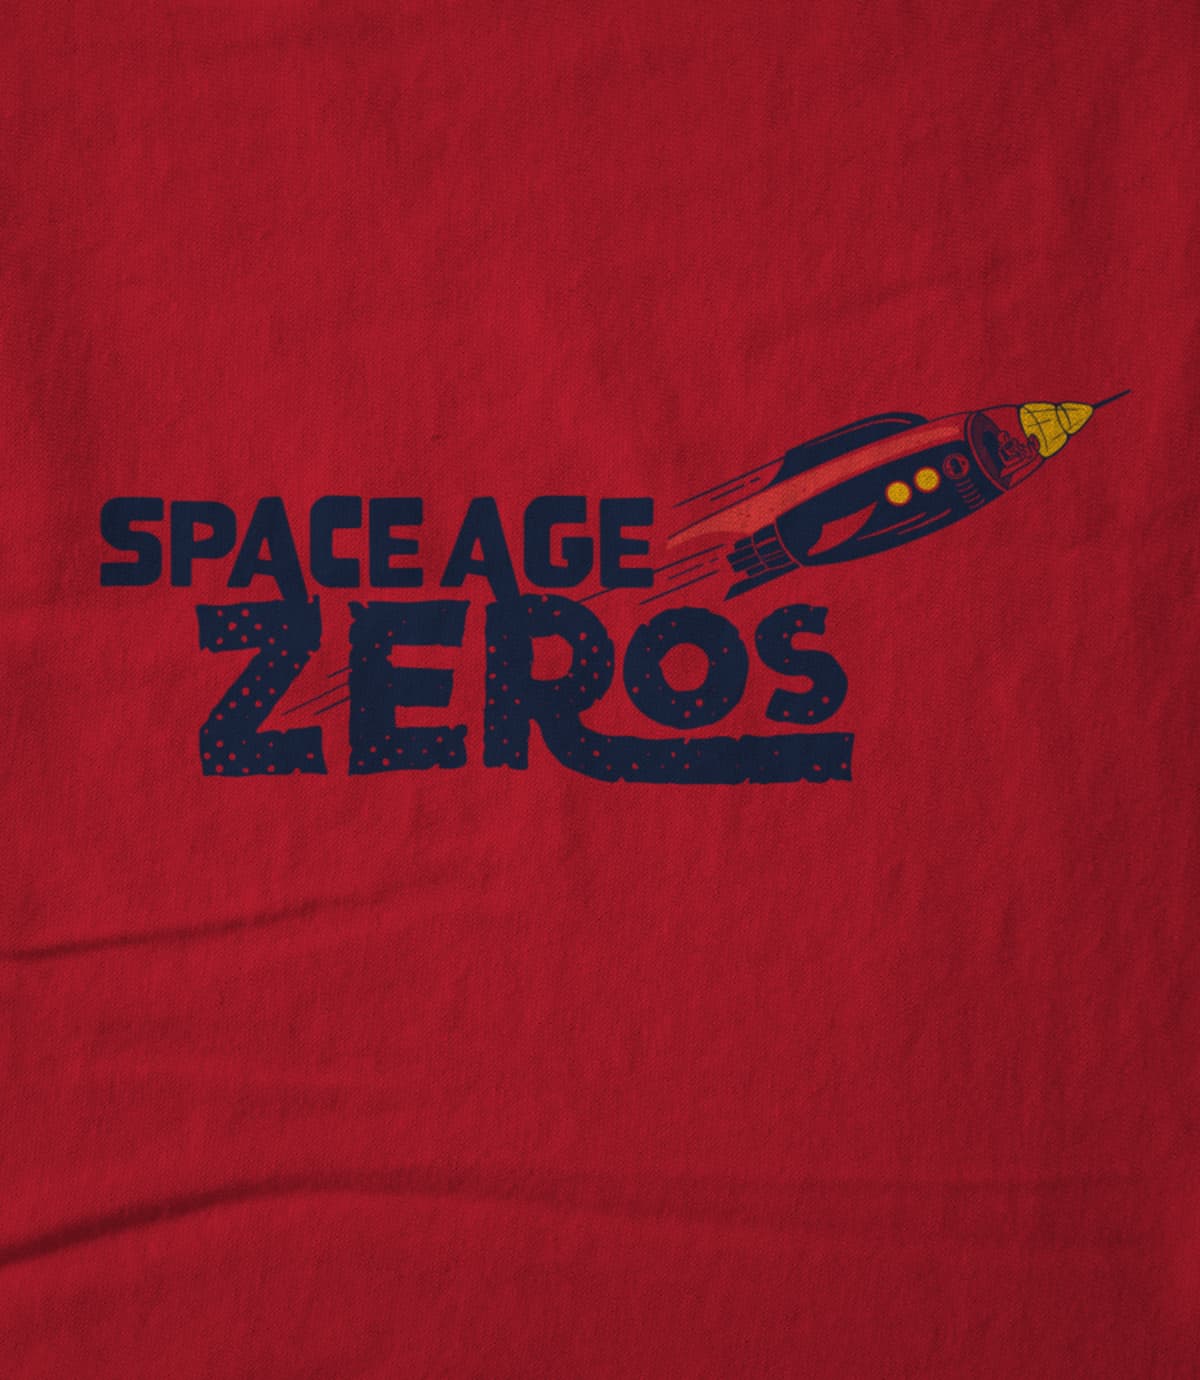 Space Age Zeros